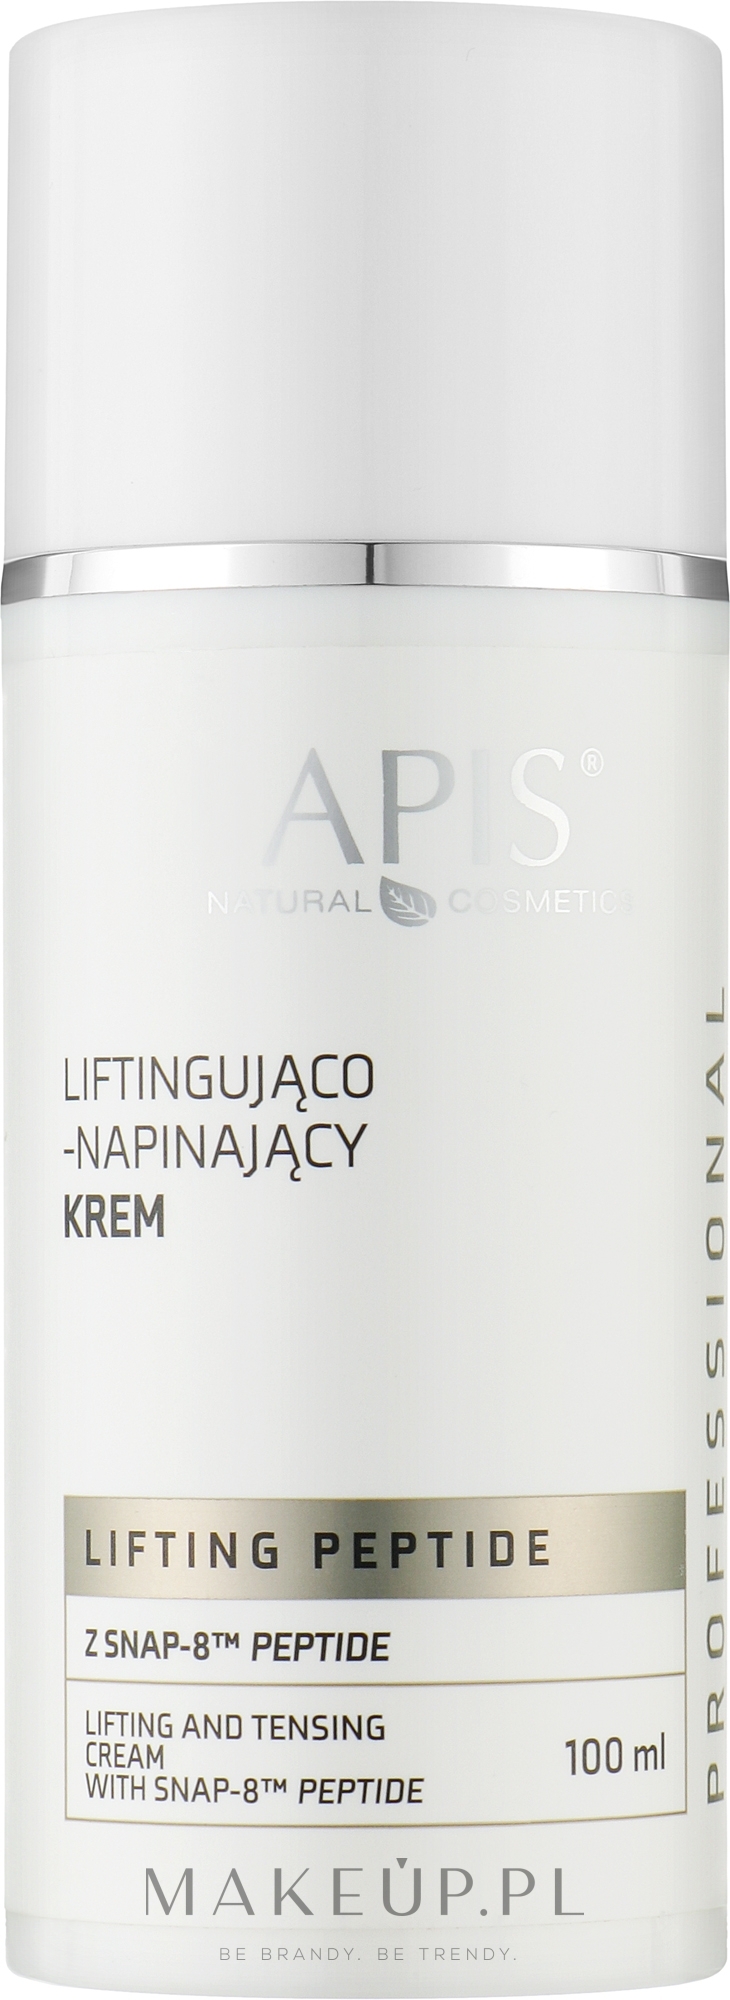 Krem do twarzy - APIS Professional Lifting Peptide Lifting And Tensing Cream — Zdjęcie 100 ml